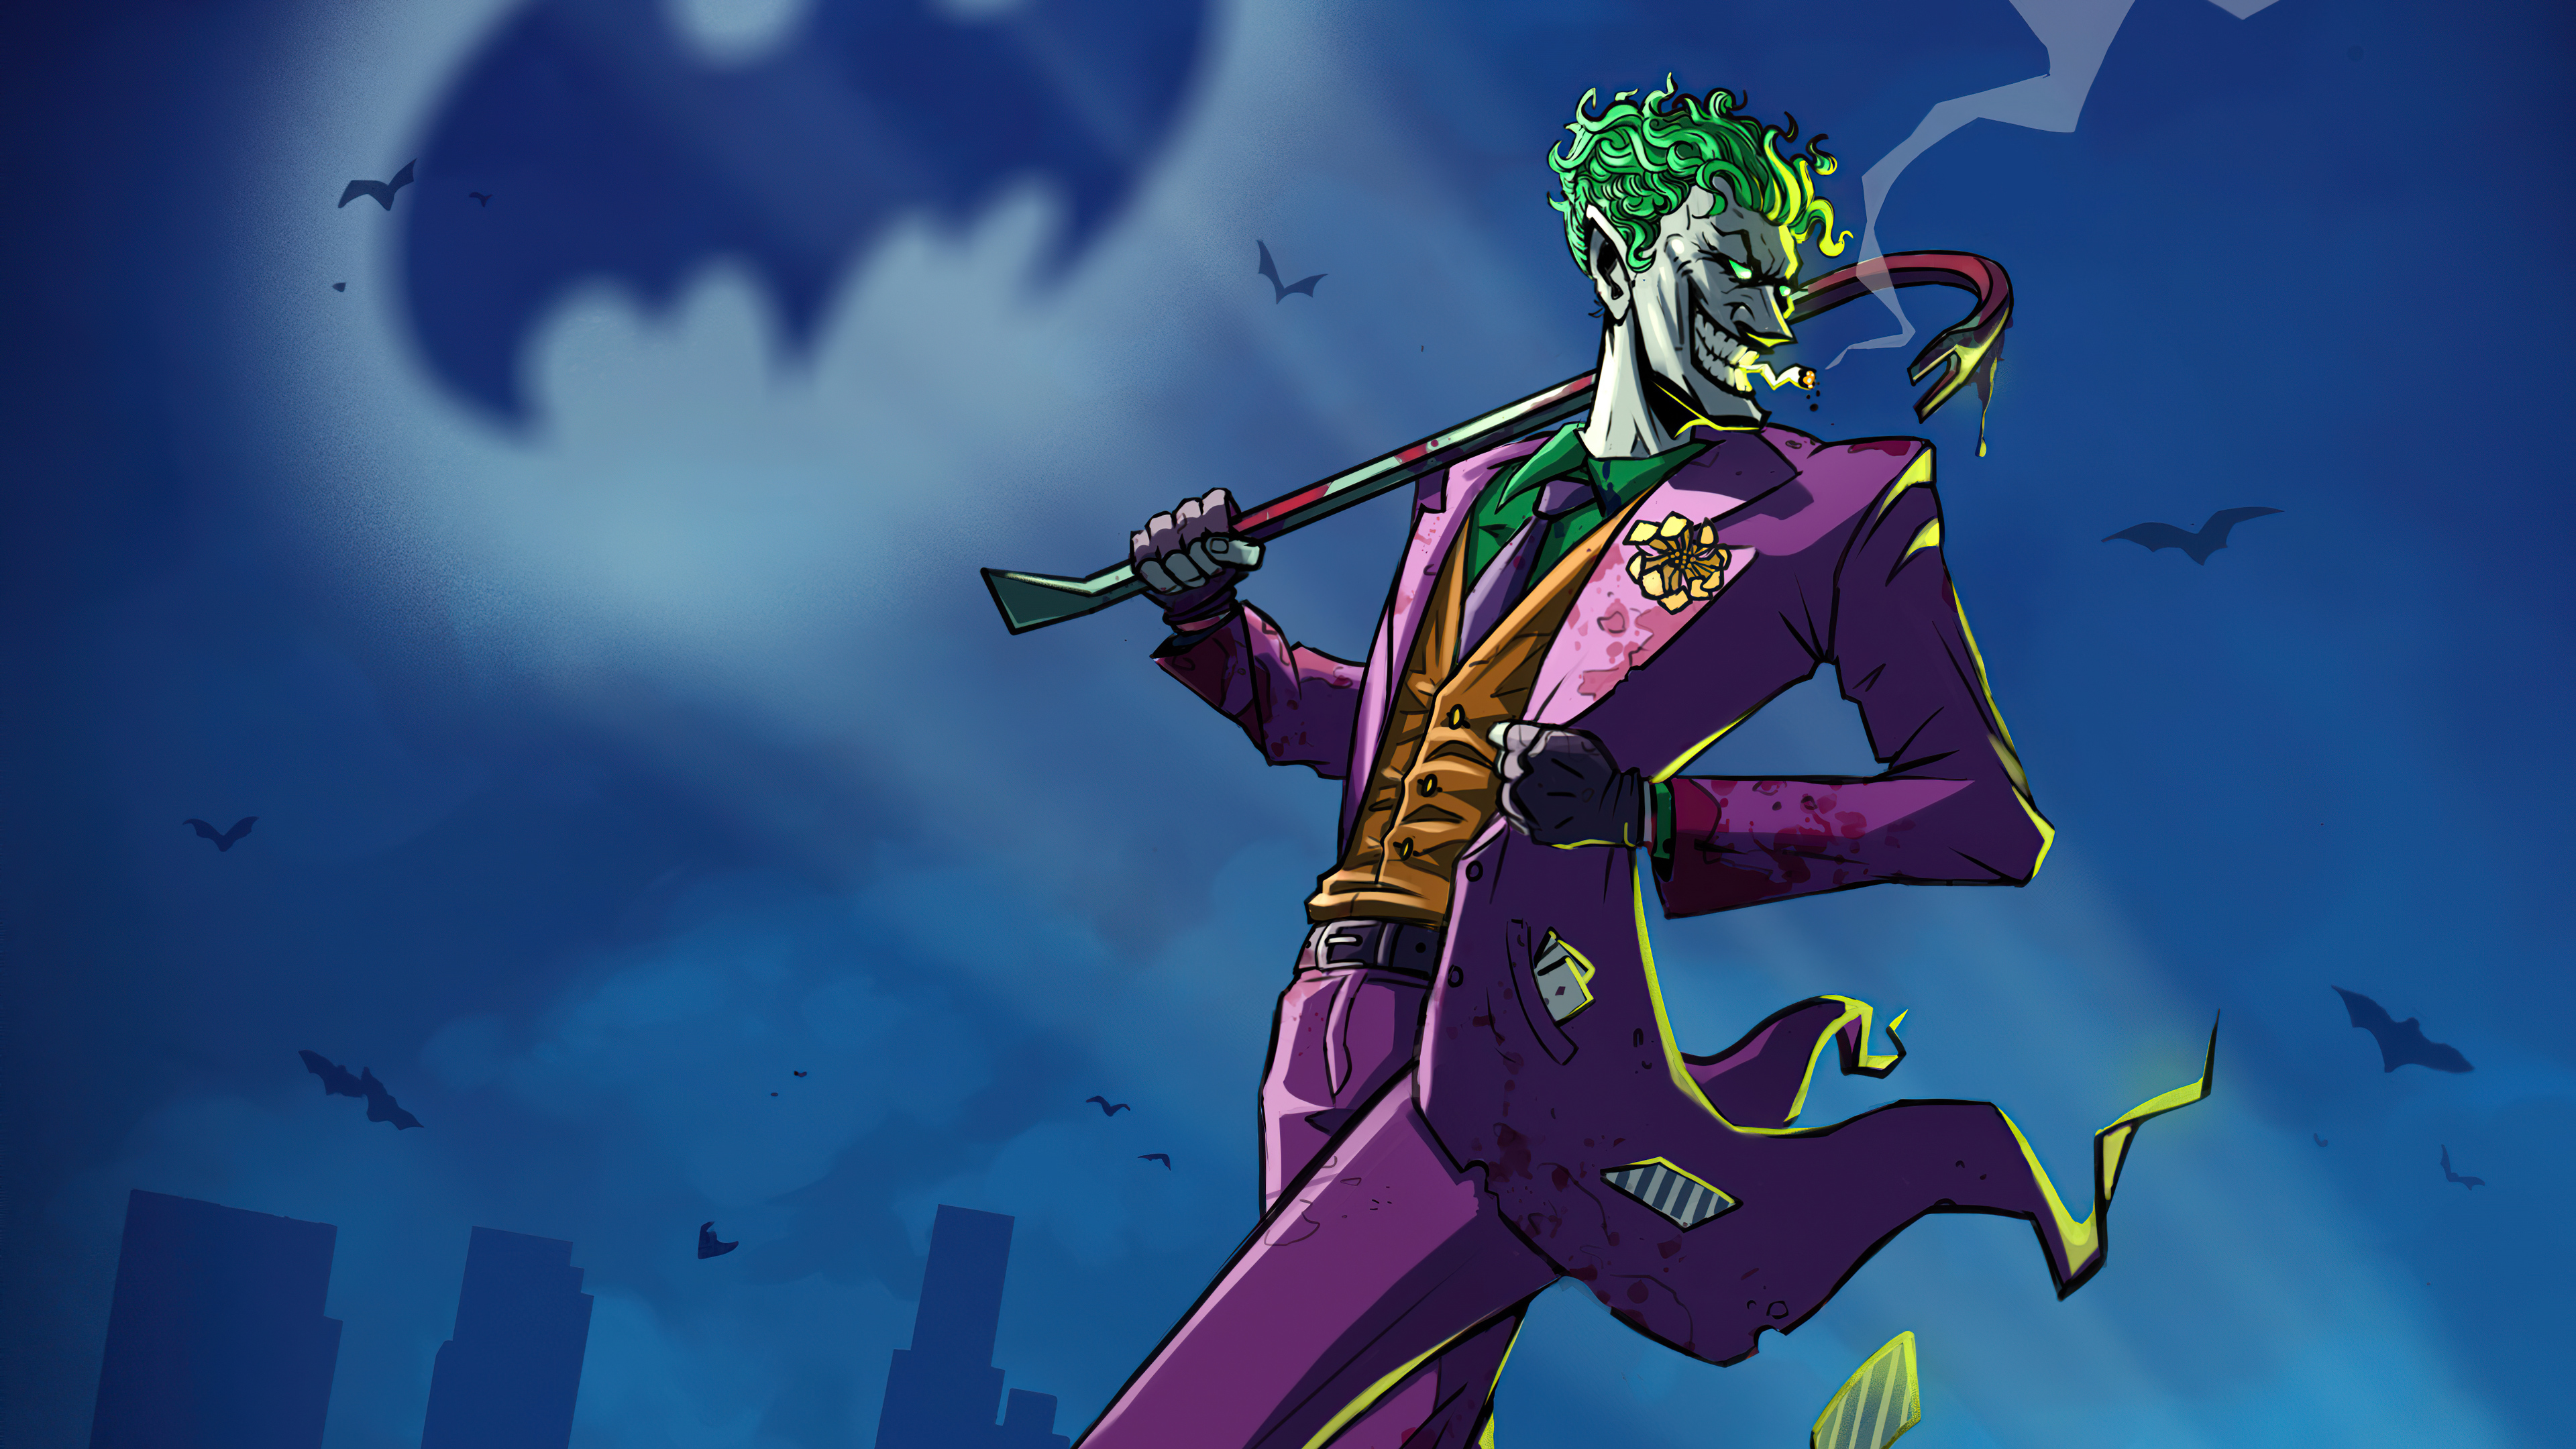 Joker DC Comic Digital 4K Wallpaper, HD Superheroes 4K Wallpapers, Images,  Photos and Background - Wallpapers Den